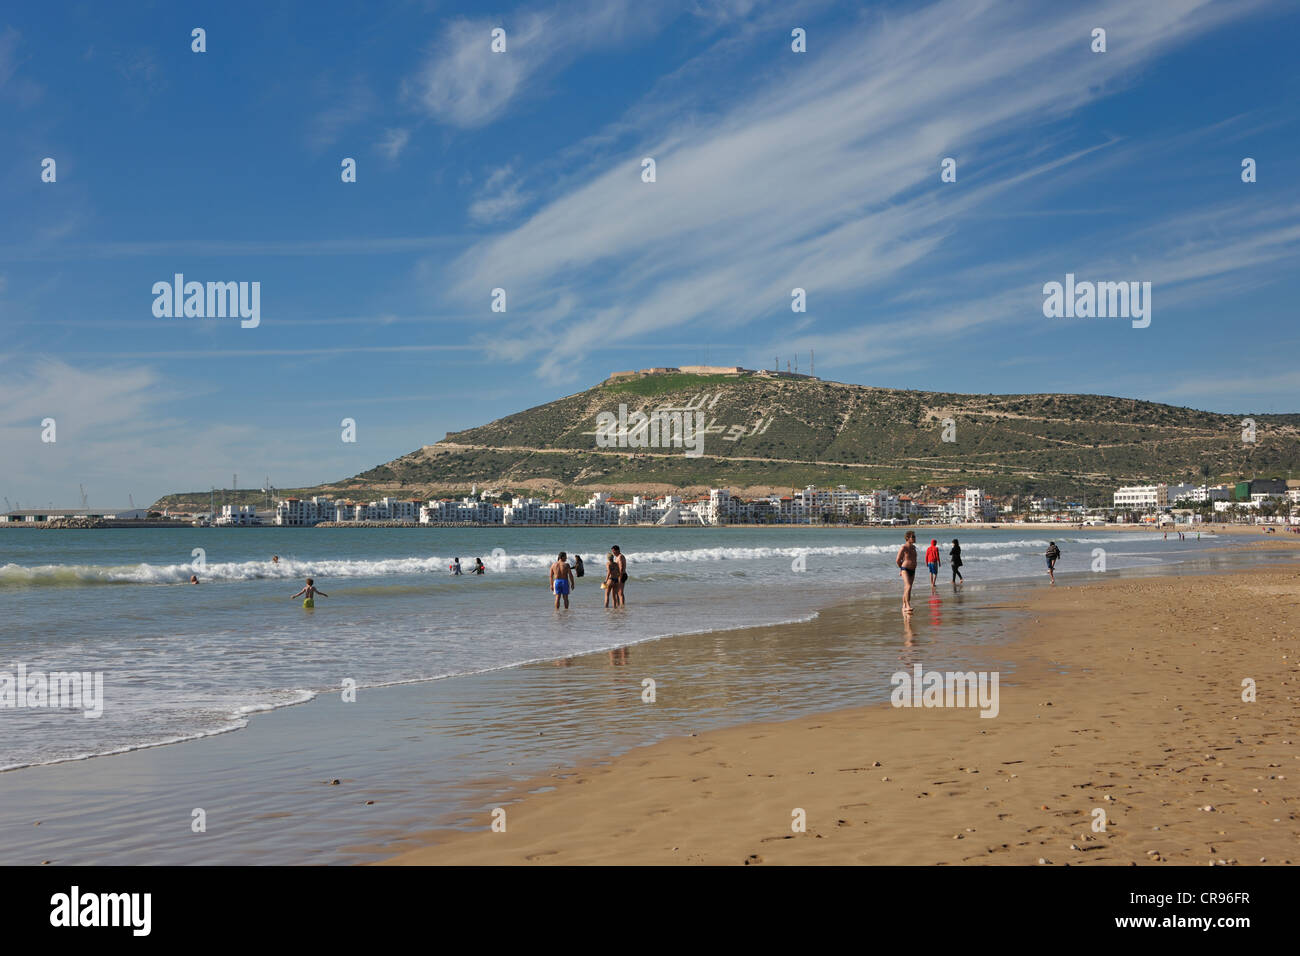 Agadir Beach, hill with the words, Allah, al-Watan, al-Malik, meaning Allah, the Homeland, the King, Morocco, Africa Stock Photo